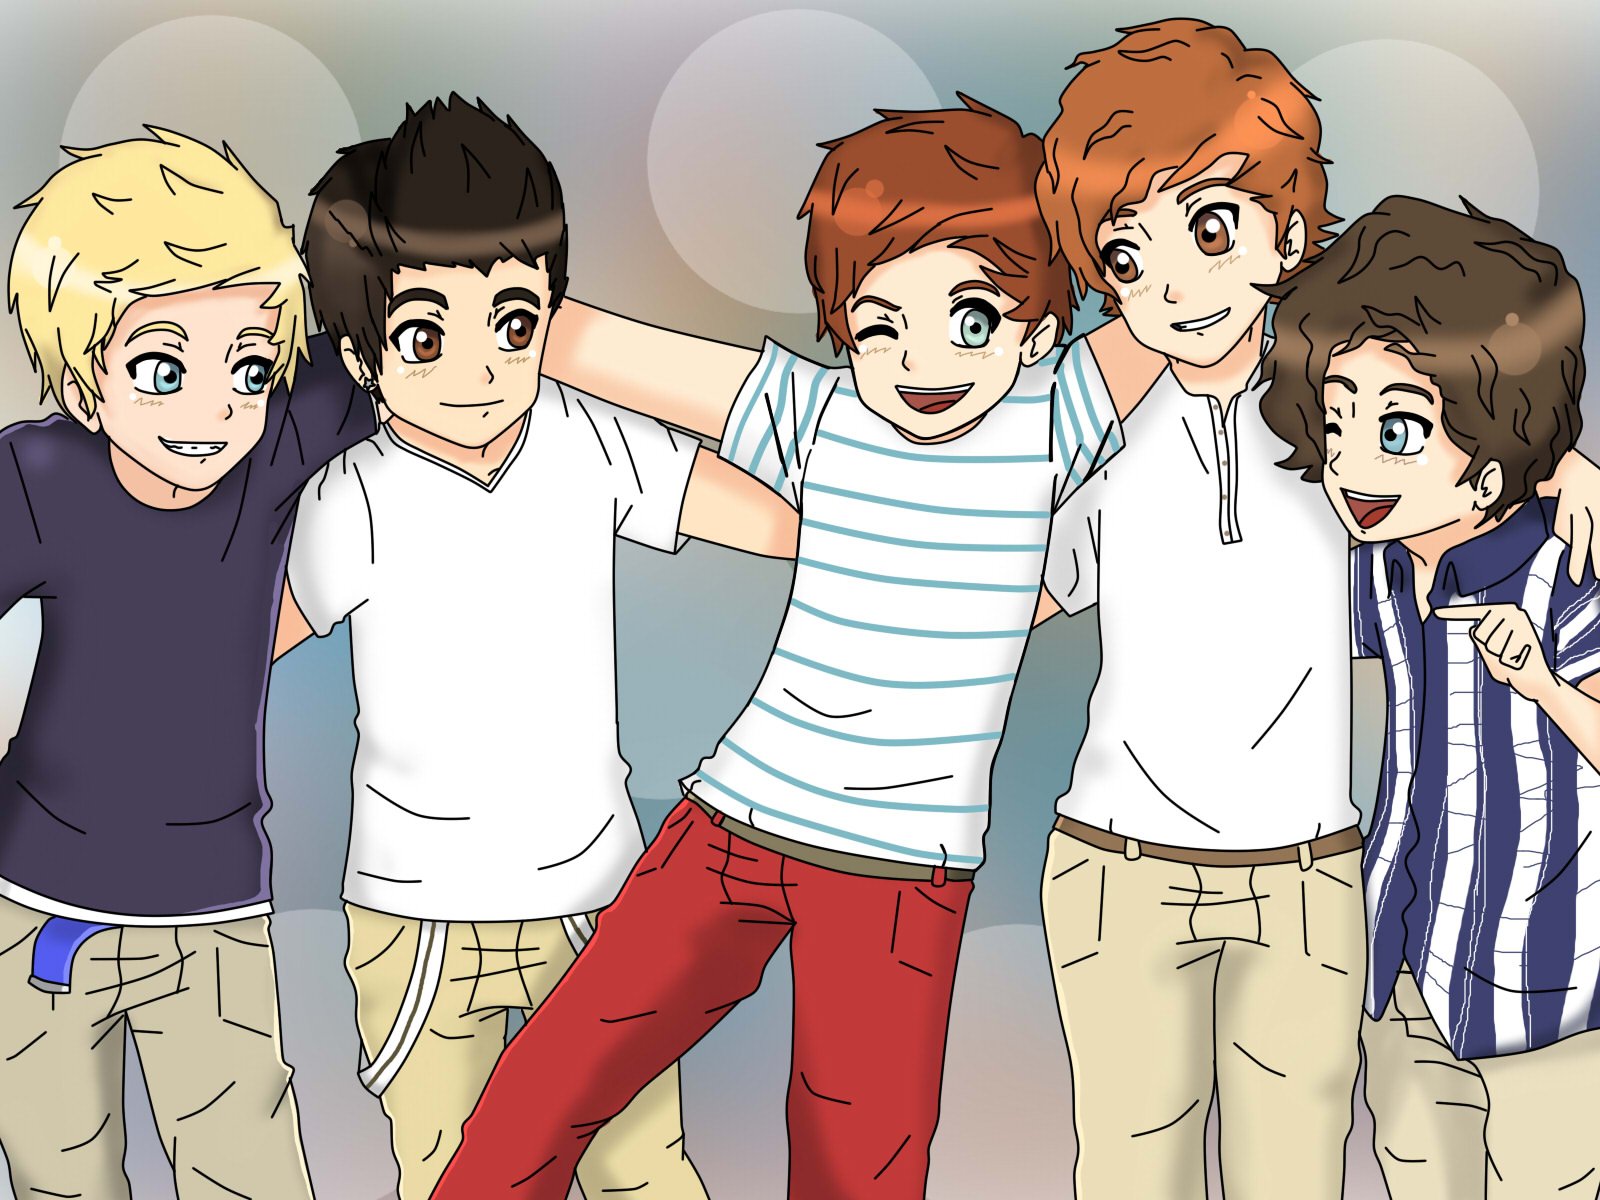 50+] One Direction Cartoon Wallpapers - WallpaperSafari